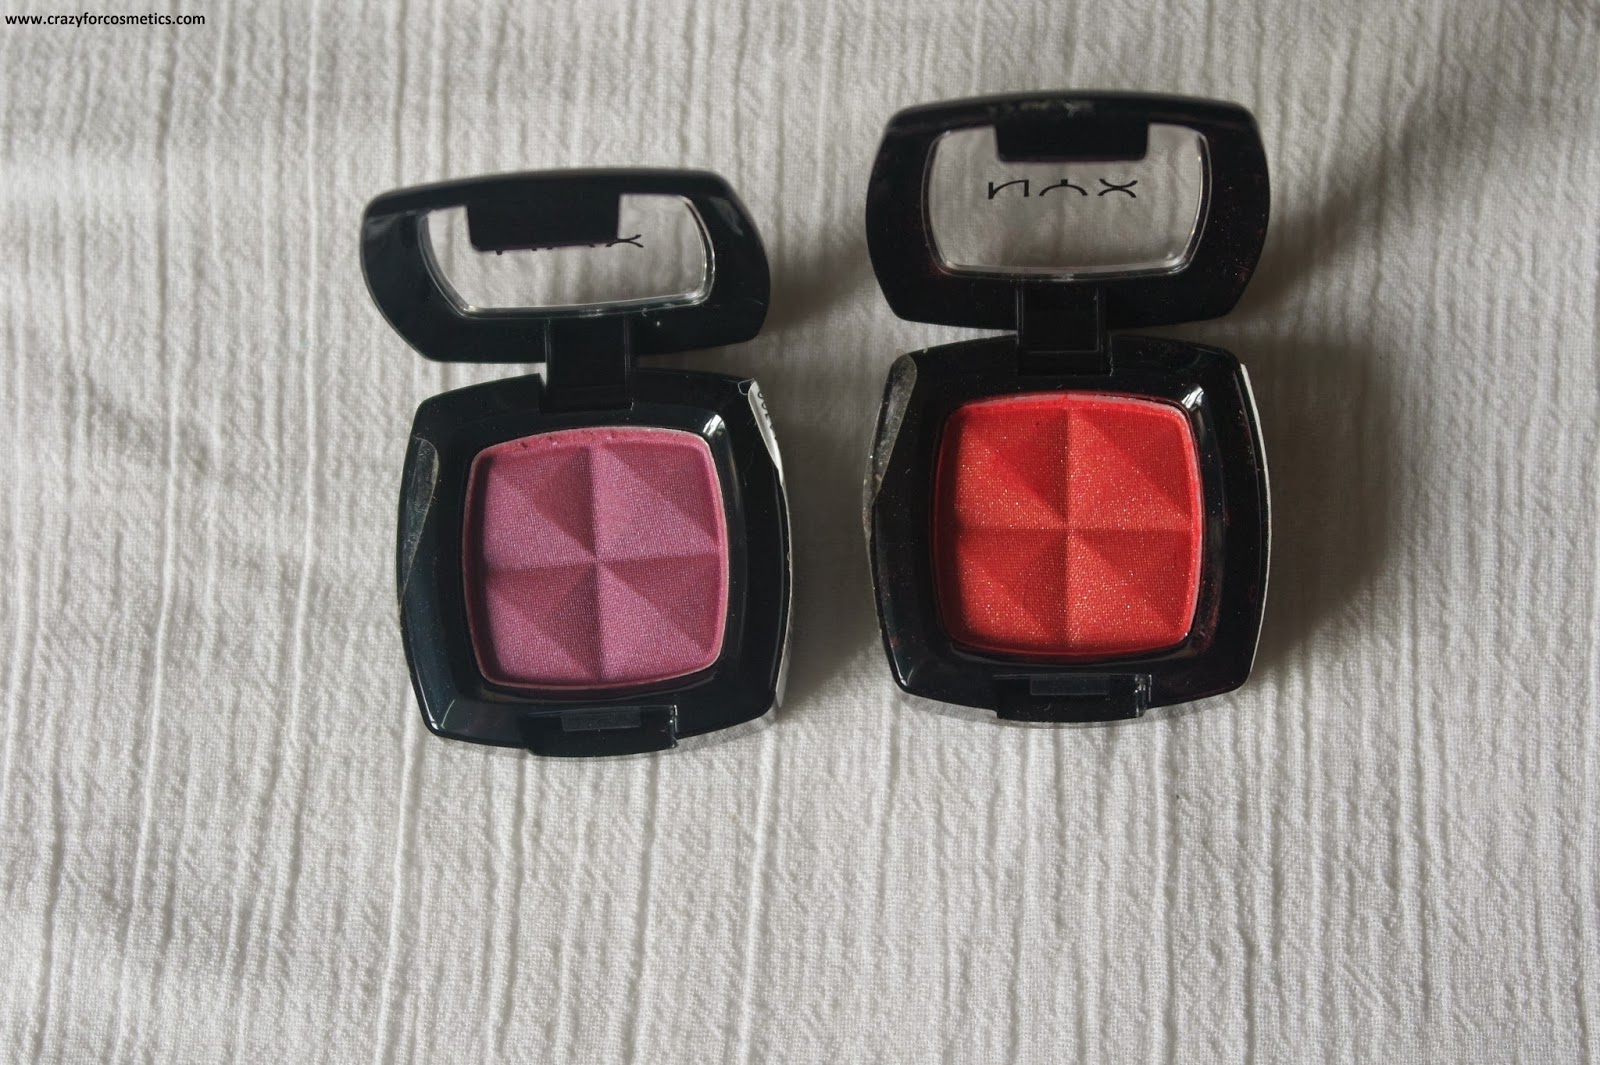 NYX Cosmetics-NYX Sunrise Eyeshadow Review-Eyeshadow Review & Application